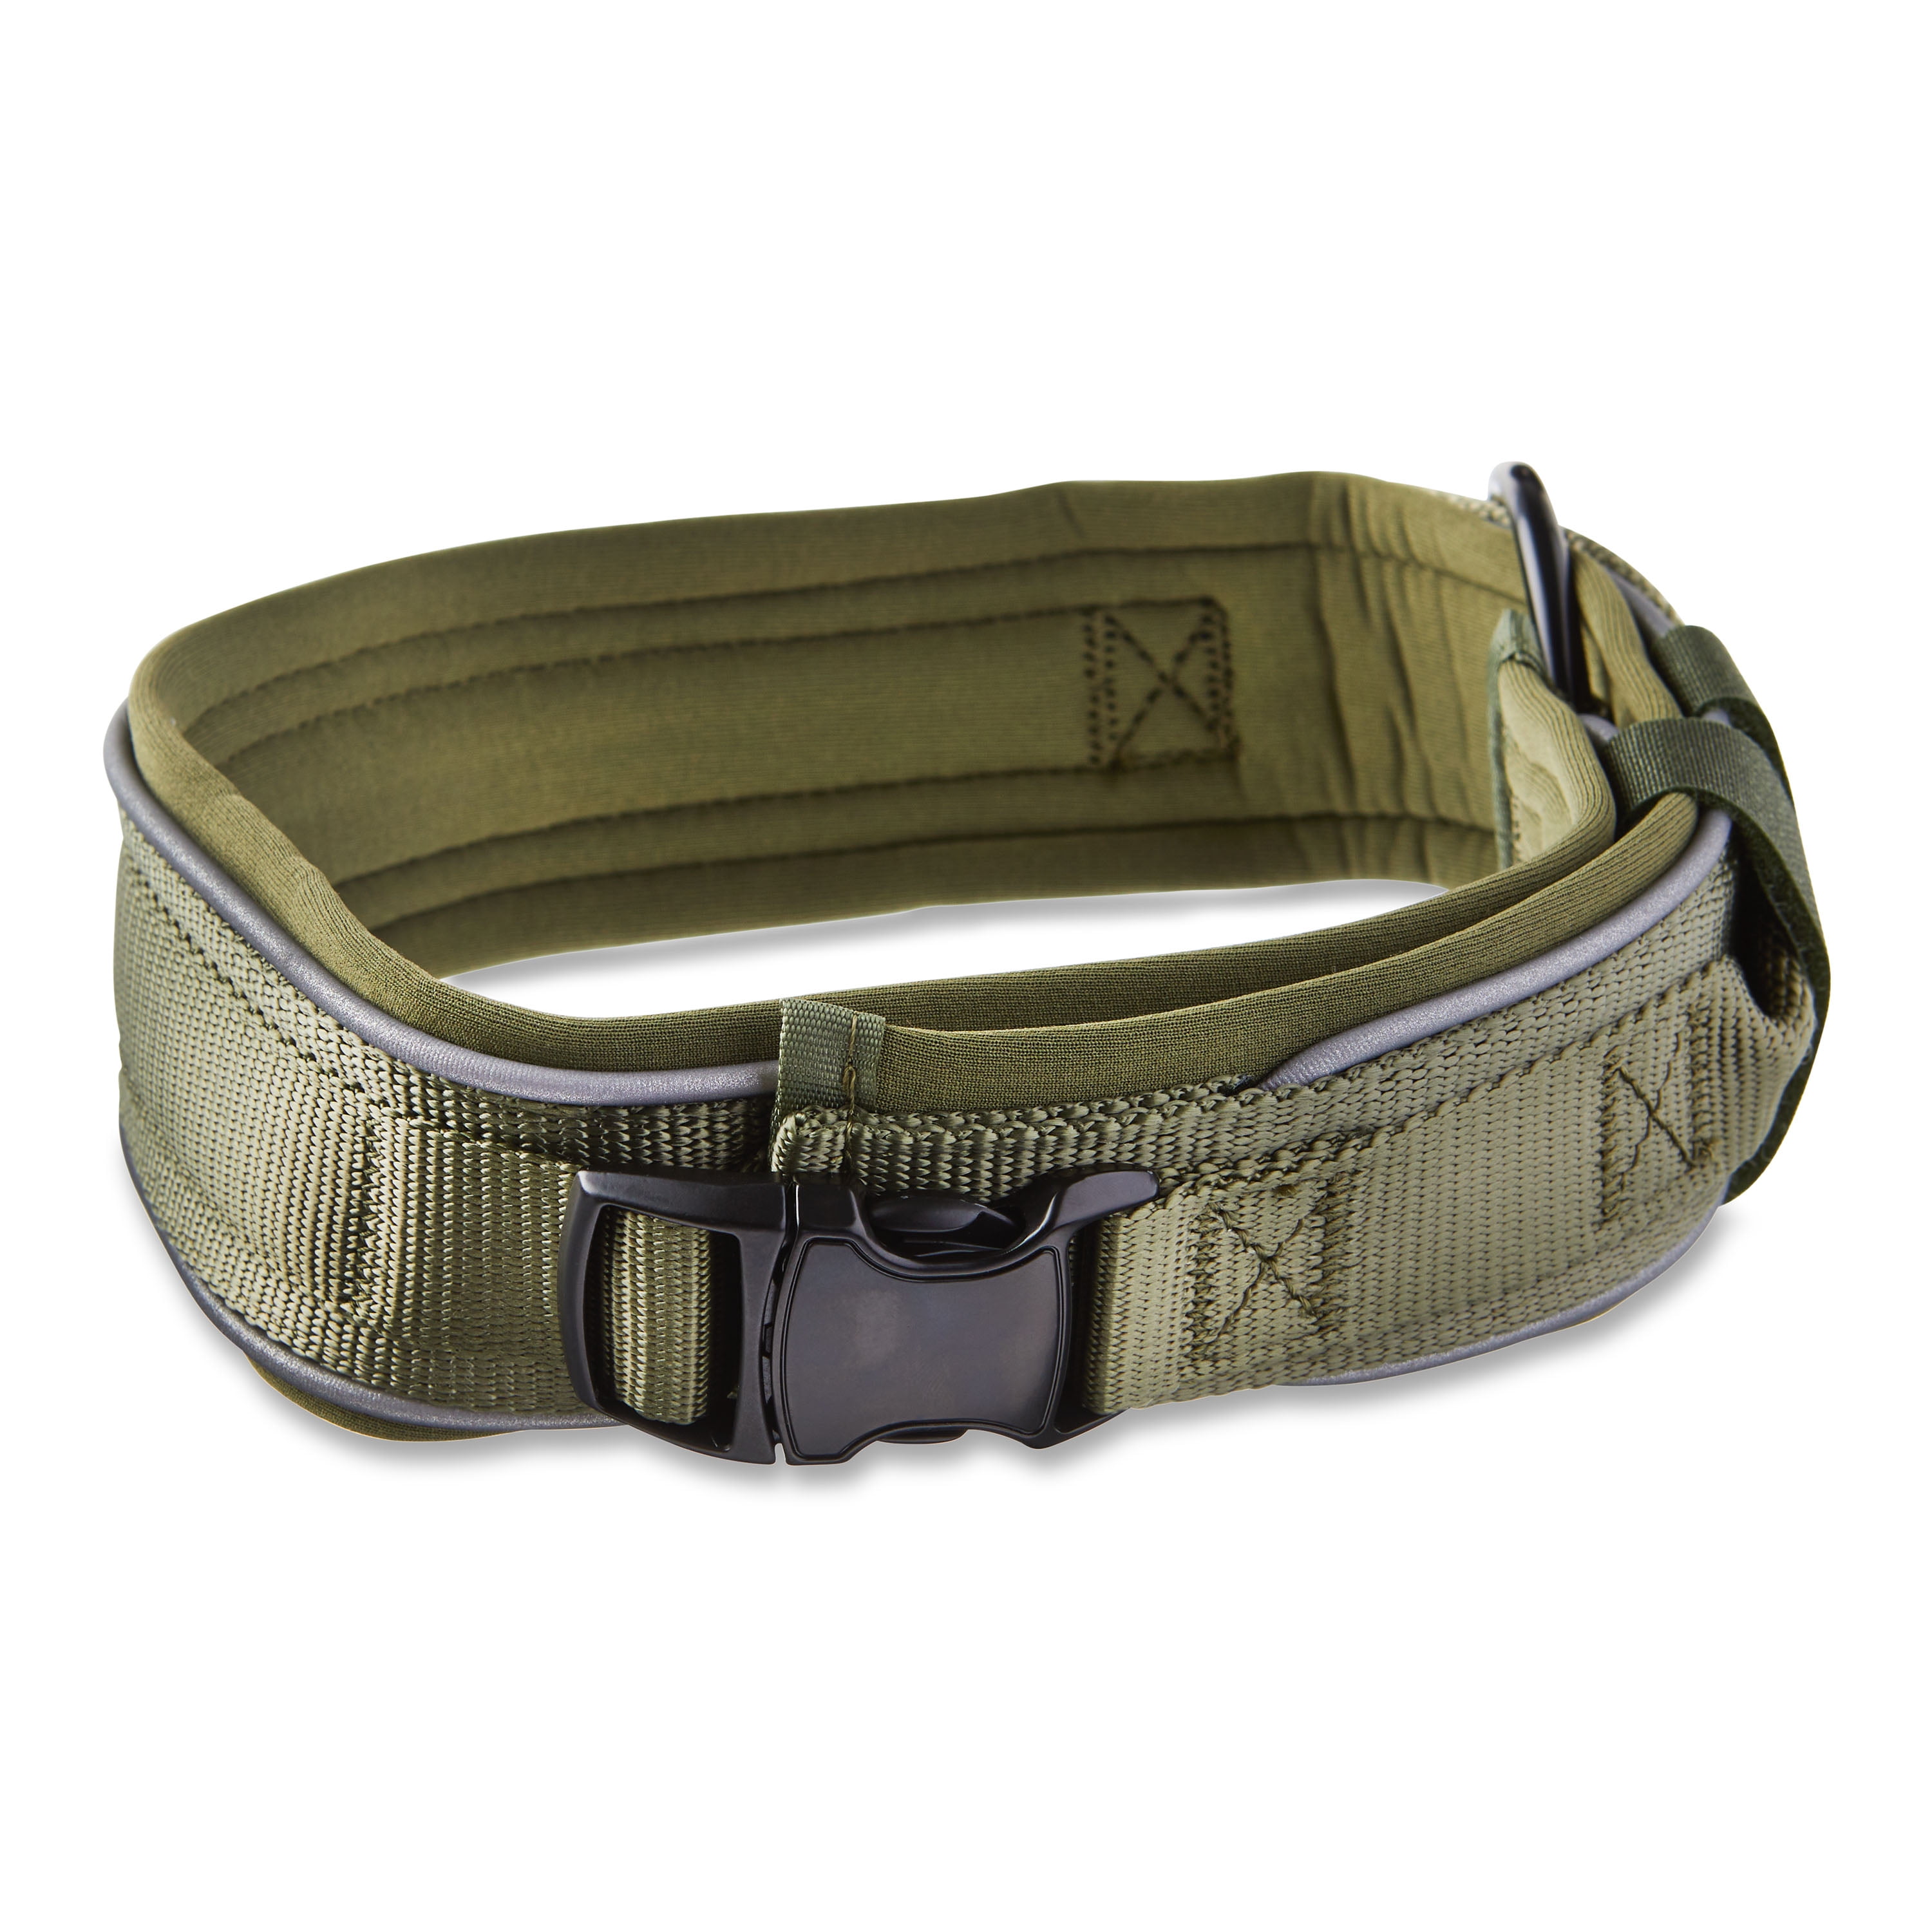 Vibrant Life Tactical Adjustable Dog Collar, Olive Green, L